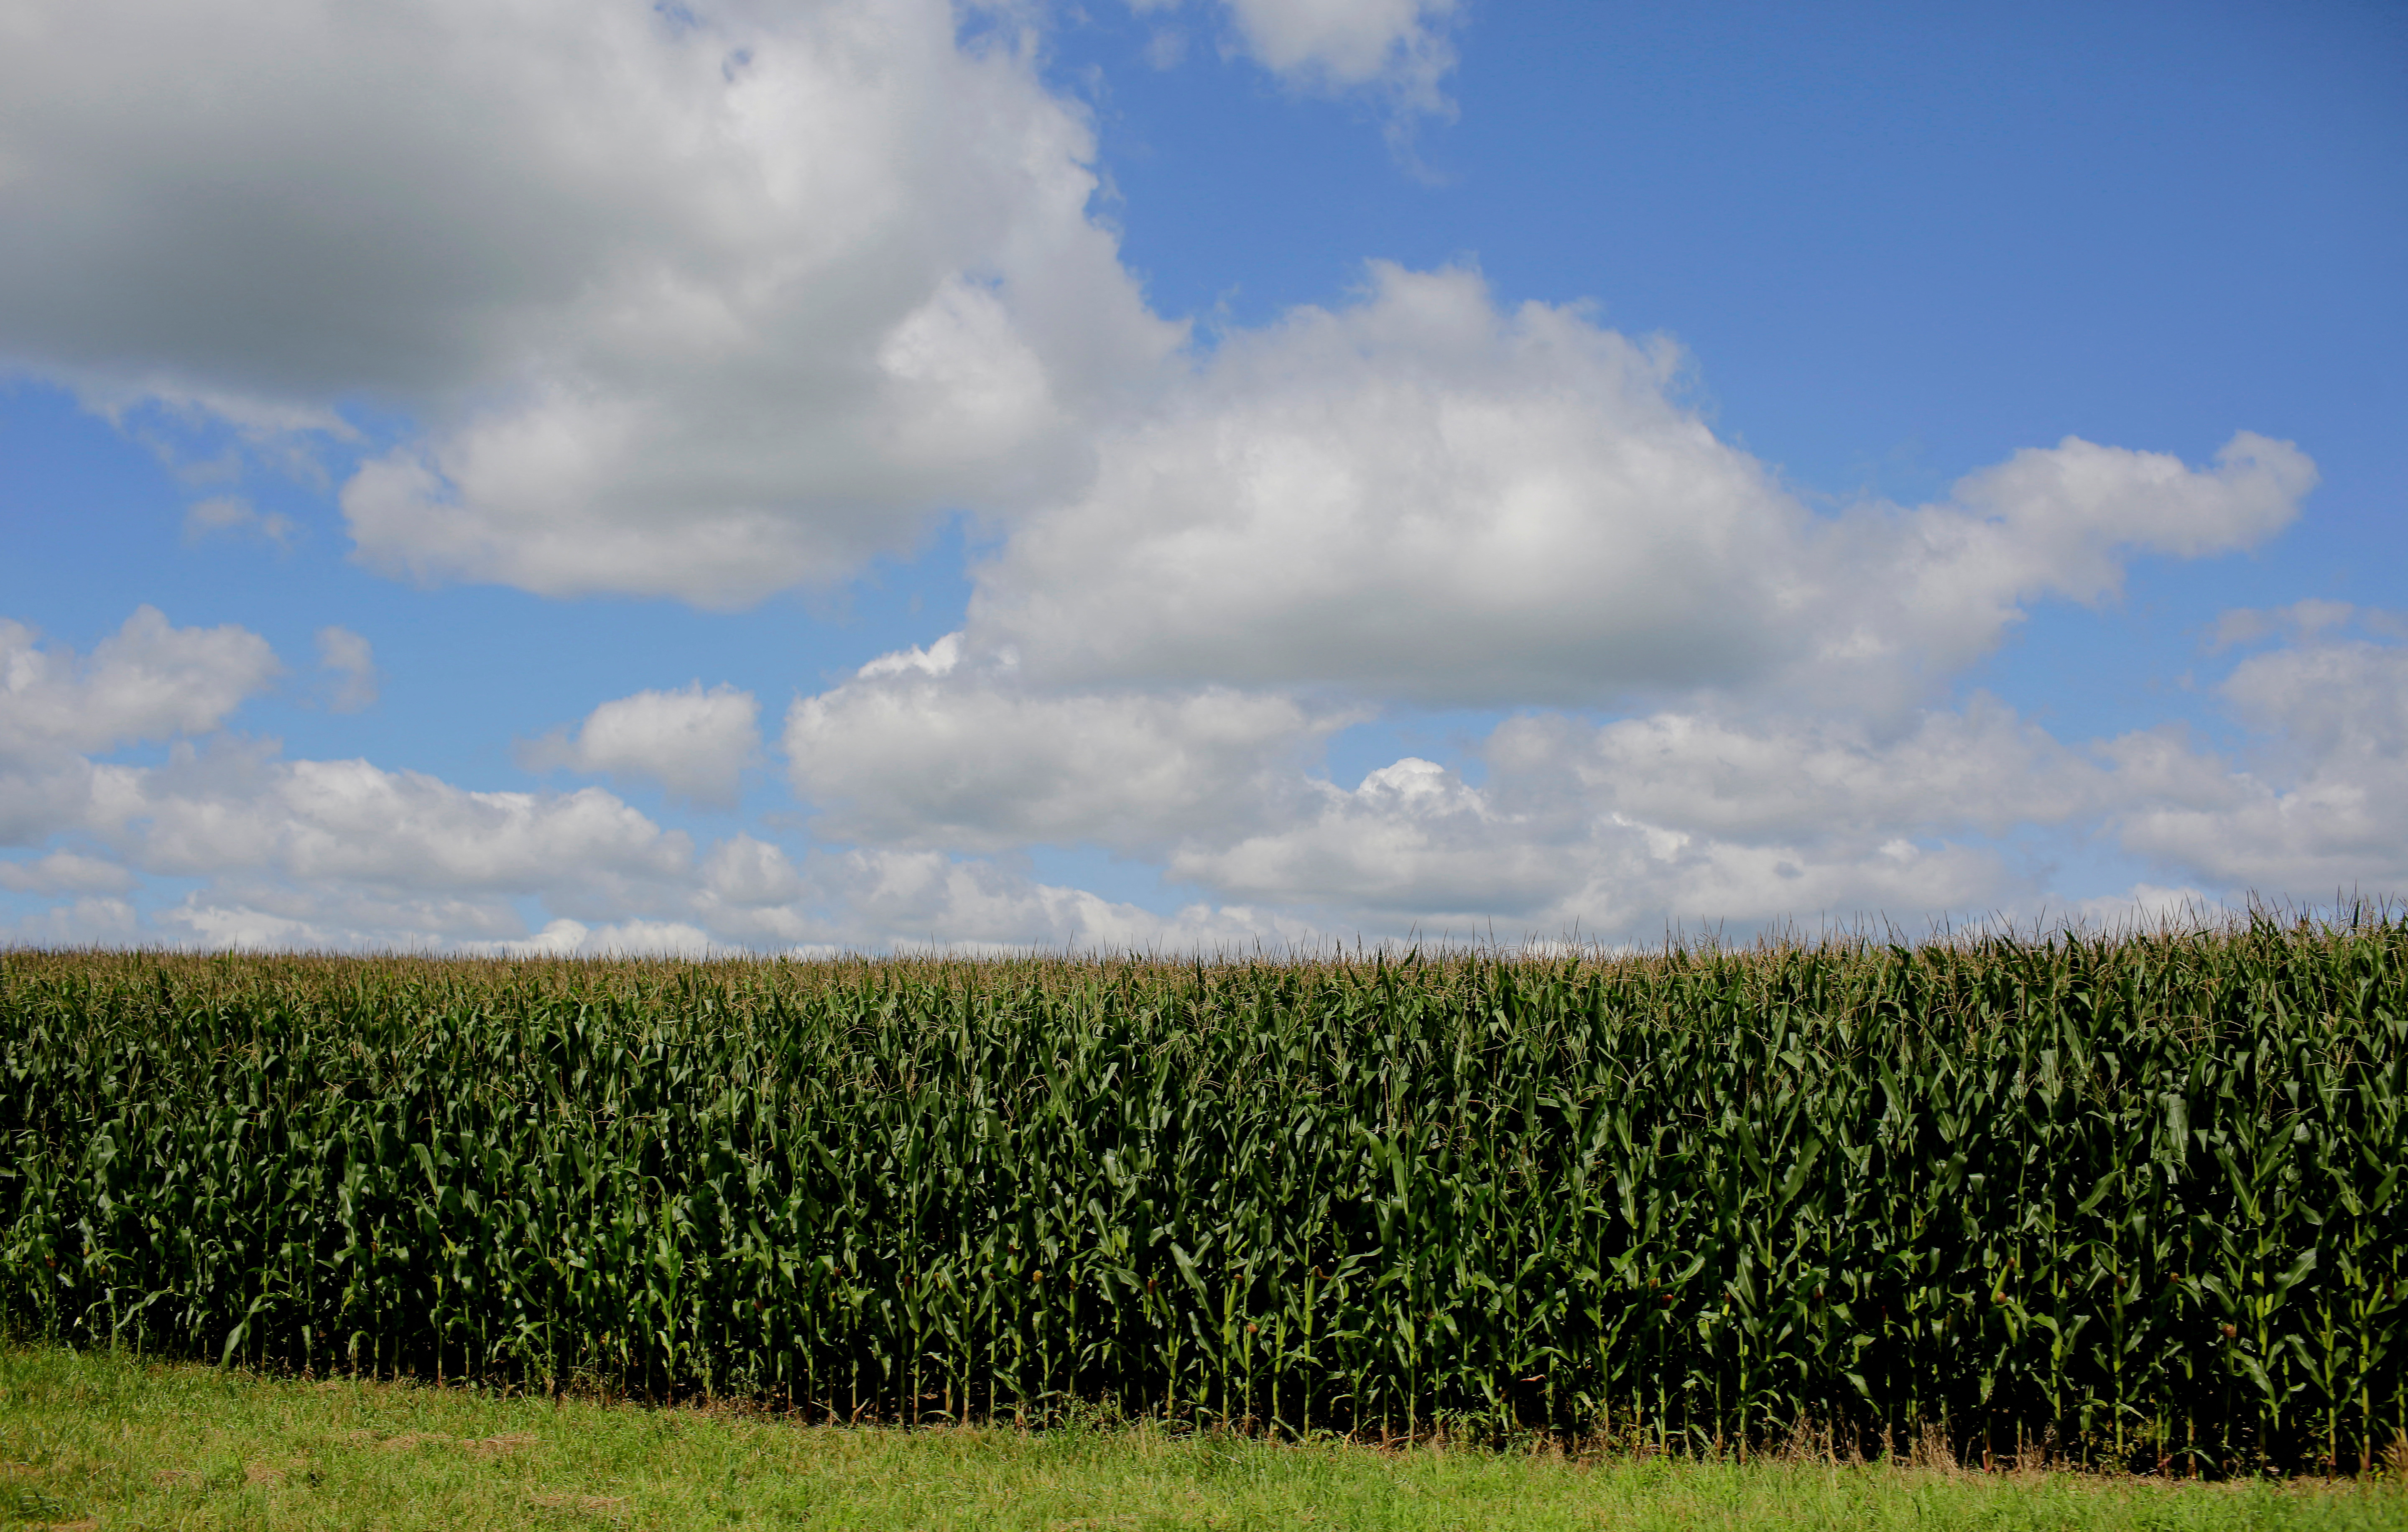 FILE PHOTO: Clouds hover above a corn field in Iowa